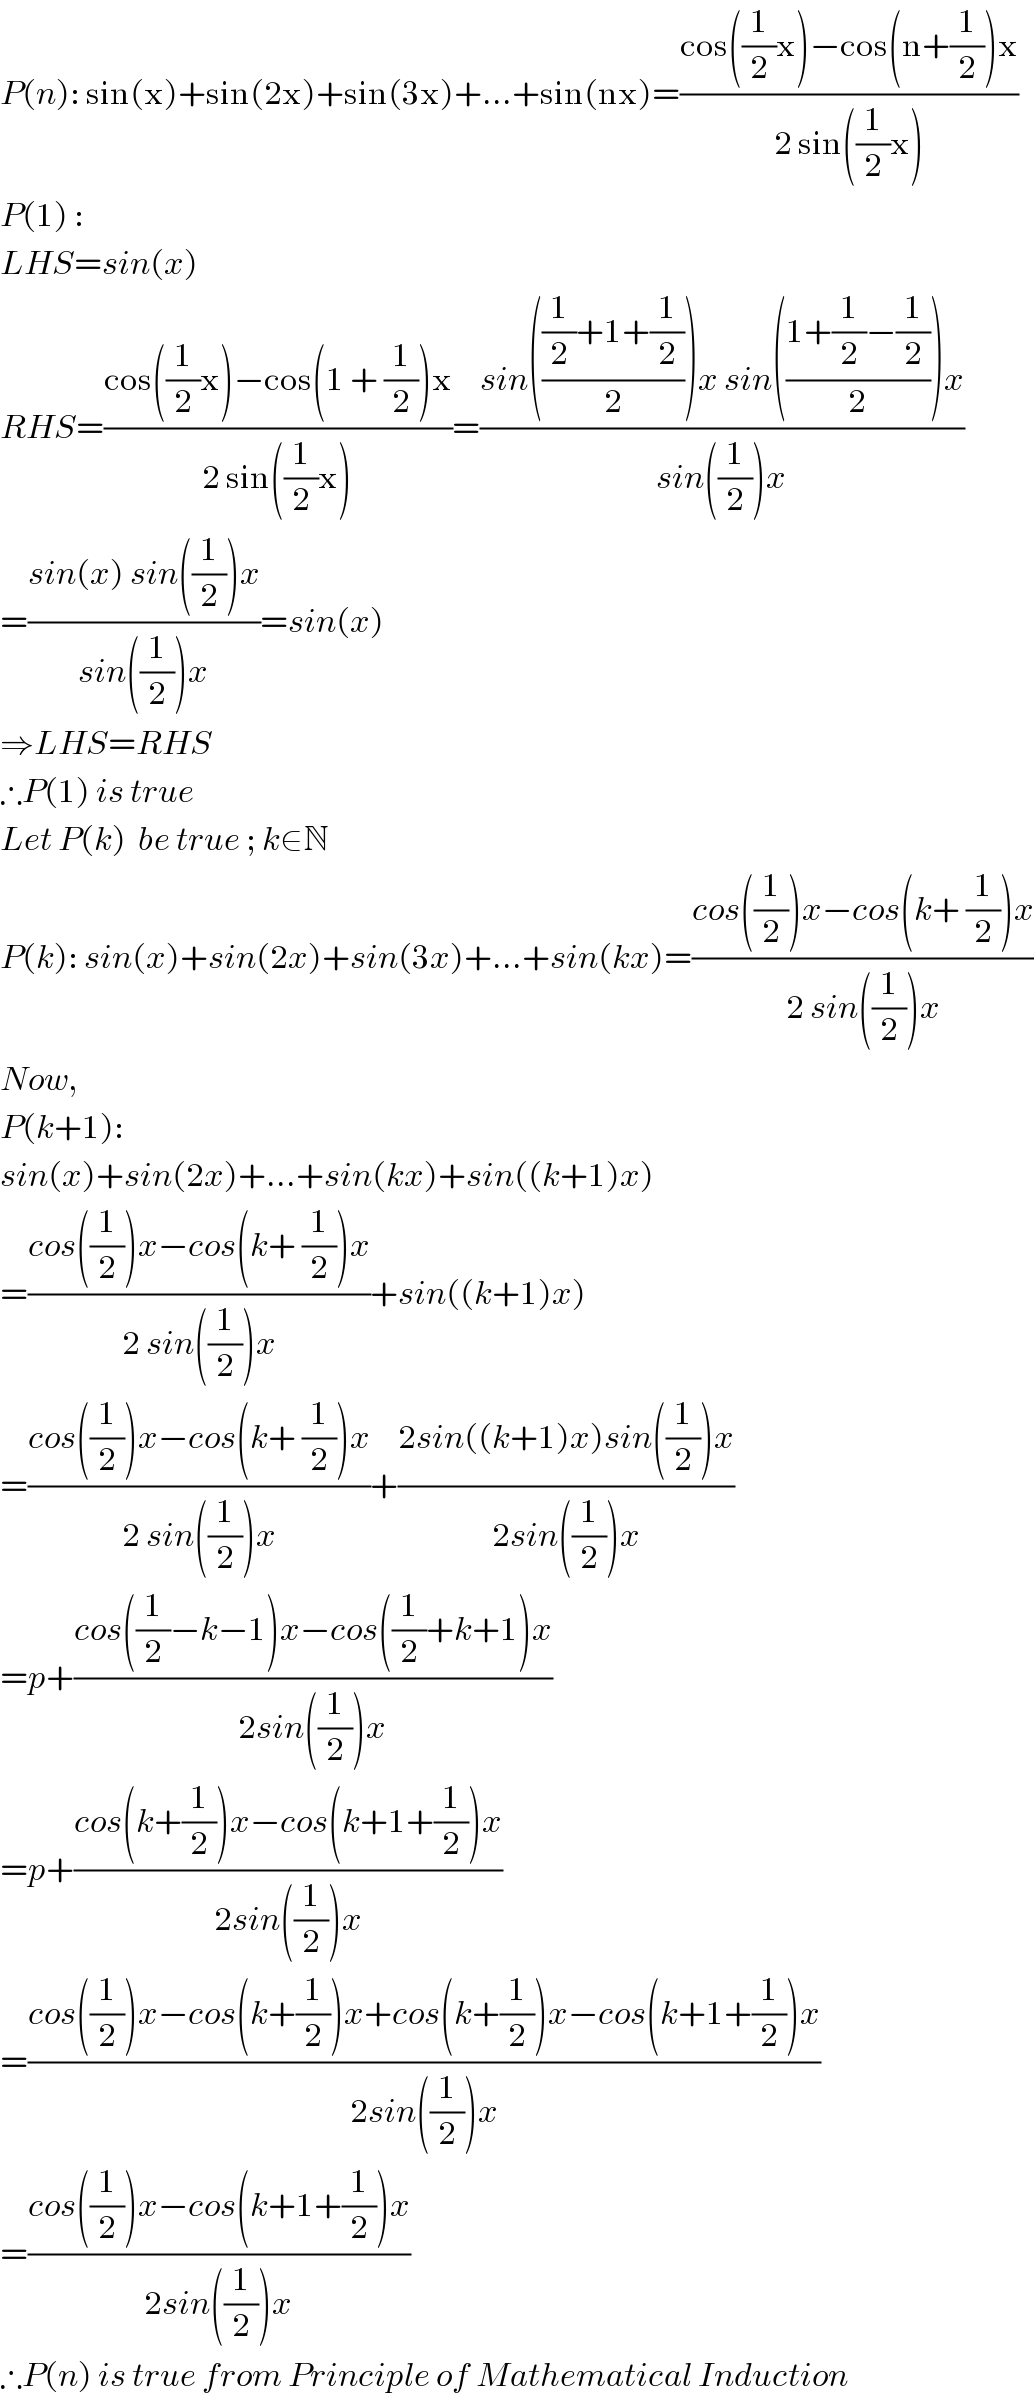 P(n): sin(x)+sin(2x)+sin(3x)+...+sin(nx)=((cos((1/2)x)−cos(n+(1/2))x)/(2 sin((1/2)x)))  P(1) :   LHS=sin(x)  RHS=((cos((1/2)x)−cos(1 + (1/2))x)/(2 sin((1/2)x)))=((sin((((1/2)+1+(1/2))/2))x sin(((1+(1/2)−(1/2))/2))x)/(sin((1/2))x))  =((sin(x) sin((1/2))x)/(sin((1/2))x))=sin(x)  ⇒LHS=RHS  ∴P(1) is true  Let P(k)  be true ; k∈N  P(k): sin(x)+sin(2x)+sin(3x)+...+sin(kx)=((cos((1/2))x−cos(k+ (1/2))x)/(2 sin((1/2))x))  Now,  P(k+1):  sin(x)+sin(2x)+...+sin(kx)+sin((k+1)x)  =((cos((1/2))x−cos(k+ (1/2))x)/(2 sin((1/2))x))+sin((k+1)x)  =((cos((1/2))x−cos(k+ (1/2))x)/(2 sin((1/2))x))+((2sin((k+1)x)sin((1/2))x)/(2sin((1/2))x))  =p+((cos((1/2)−k−1)x−cos((1/2)+k+1)x)/(2sin((1/2))x))  =p+((cos(k+(1/2))x−cos(k+1+(1/2))x)/(2sin((1/2))x))  =((cos((1/2))x−cos(k+(1/2))x+cos(k+(1/2))x−cos(k+1+(1/2))x)/(2sin((1/2))x))  =((cos((1/2))x−cos(k+1+(1/2))x)/(2sin((1/2))x))  ∴P(n) is true from Principle of Mathematical Induction  